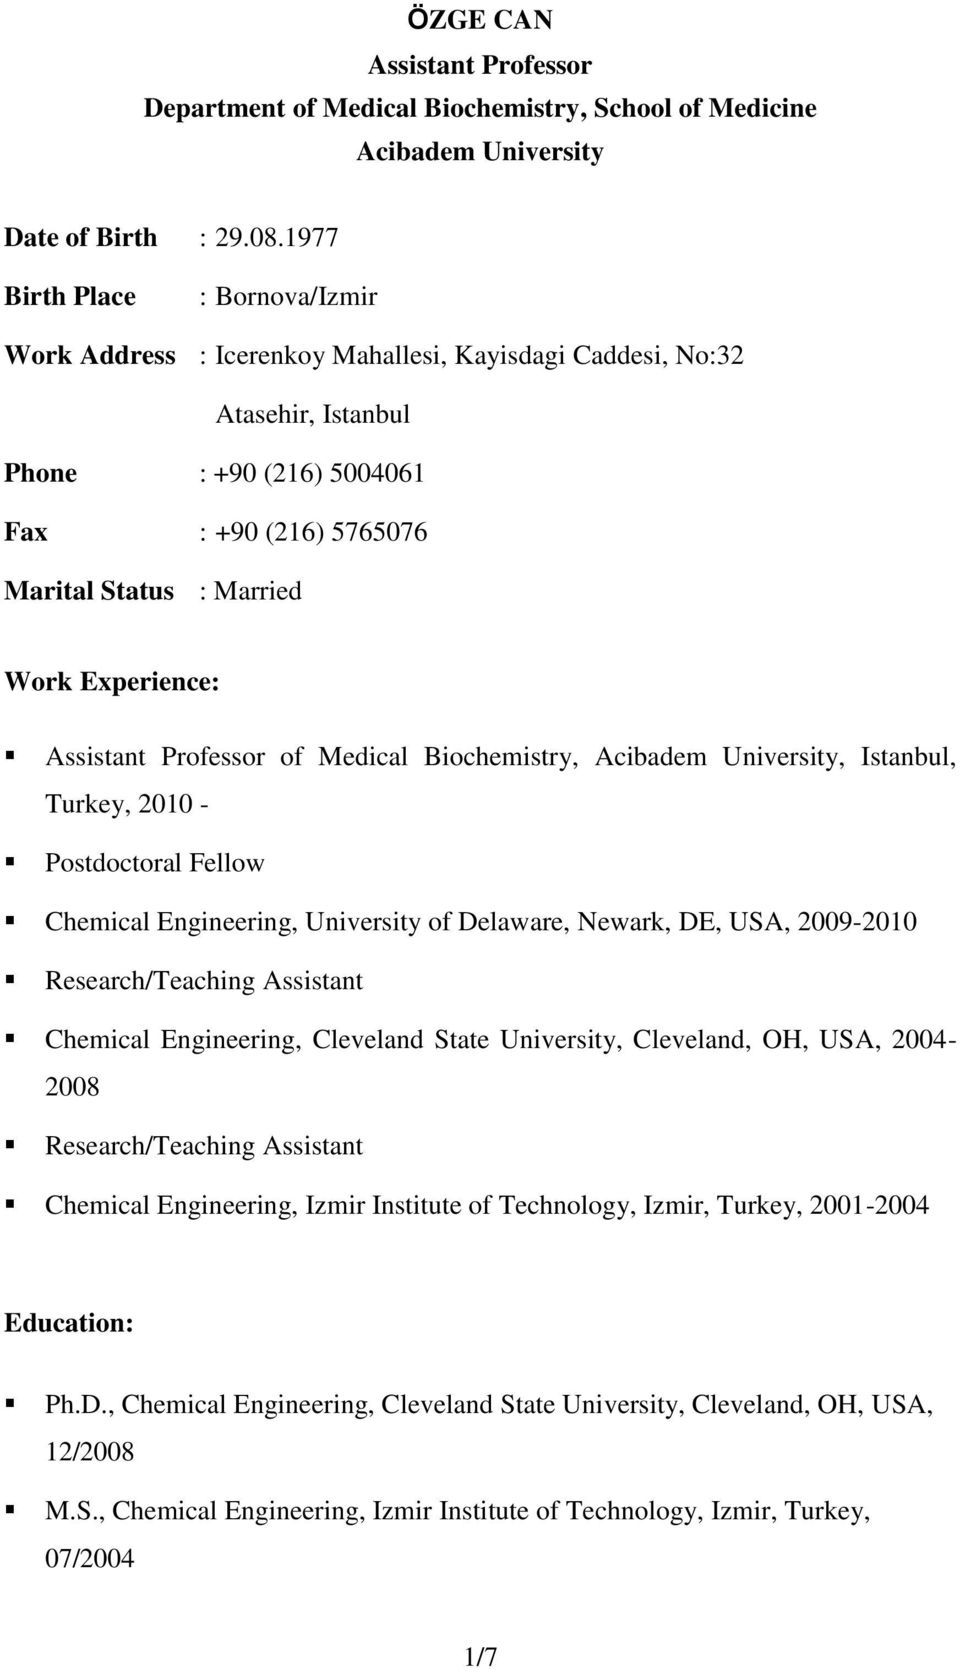 Experience: Assistant Professor of Medical Biochemistry, Acibadem University, Istanbul, Turkey, 2010 - Postdoctoral Fellow Chemical Engineering, University of Delaware, Newark, DE, USA, 2009-2010